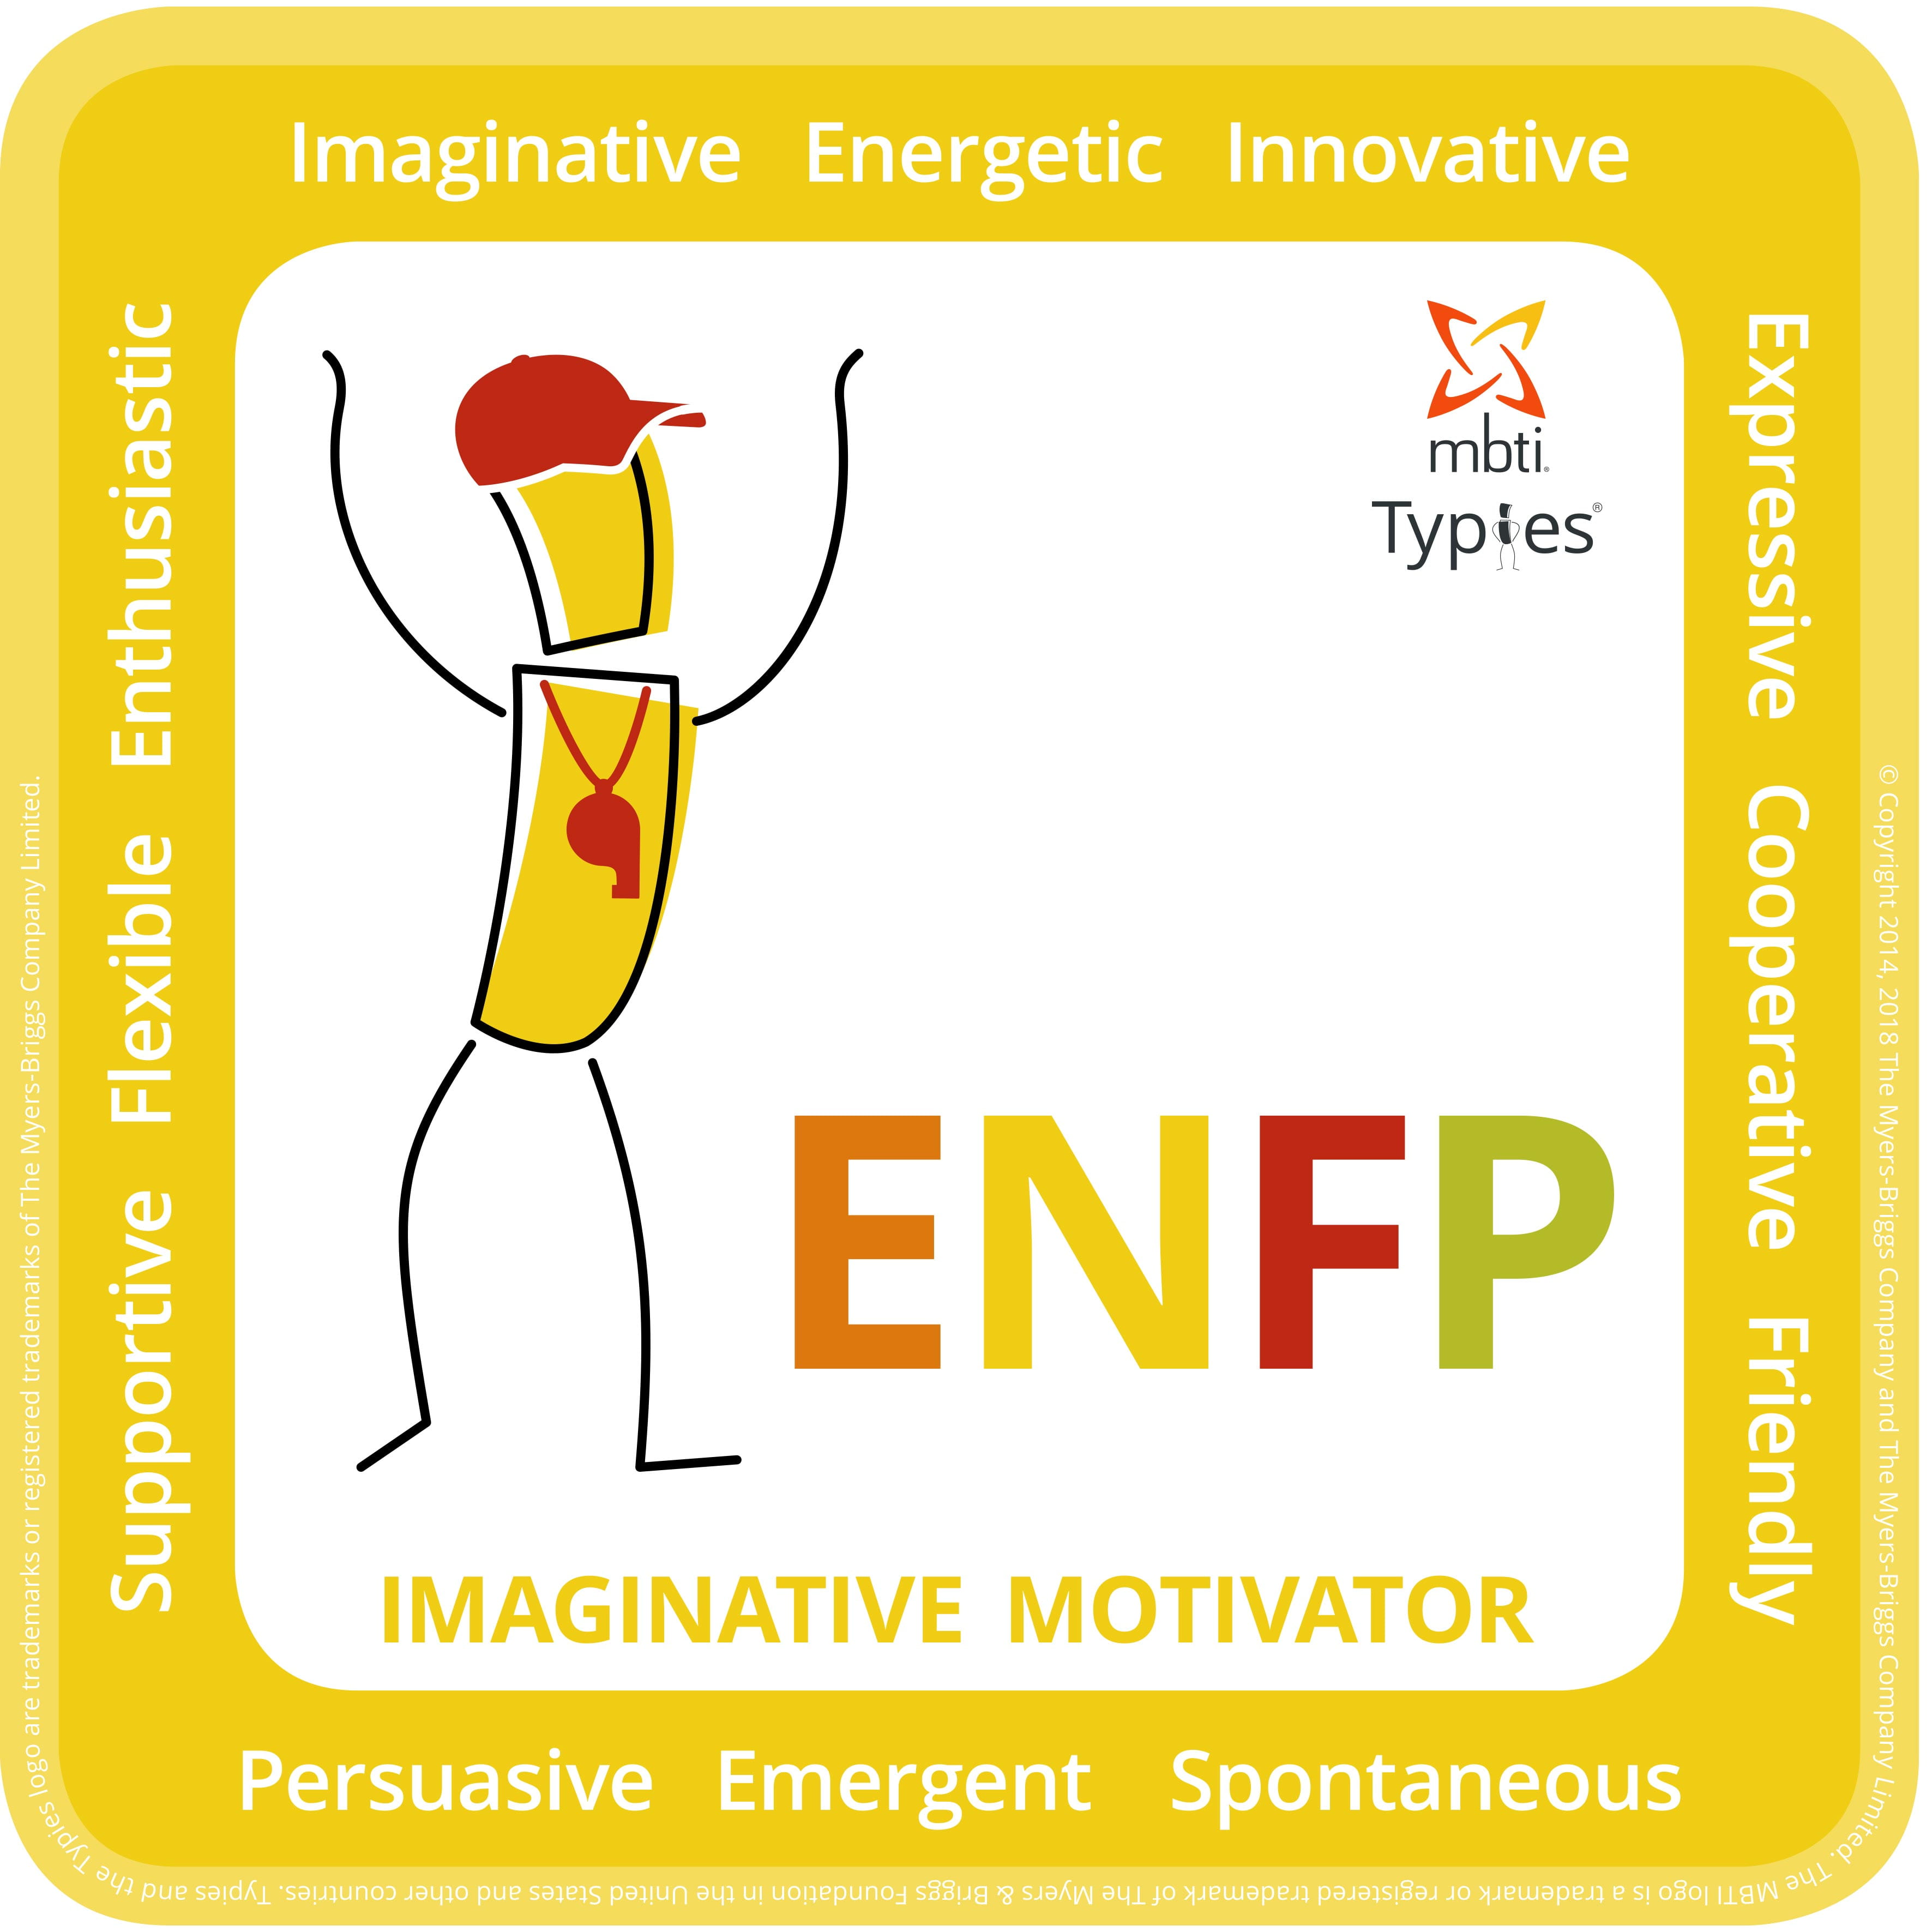 Wolfgang MBTI Personality Type: ENFP or ENFJ?